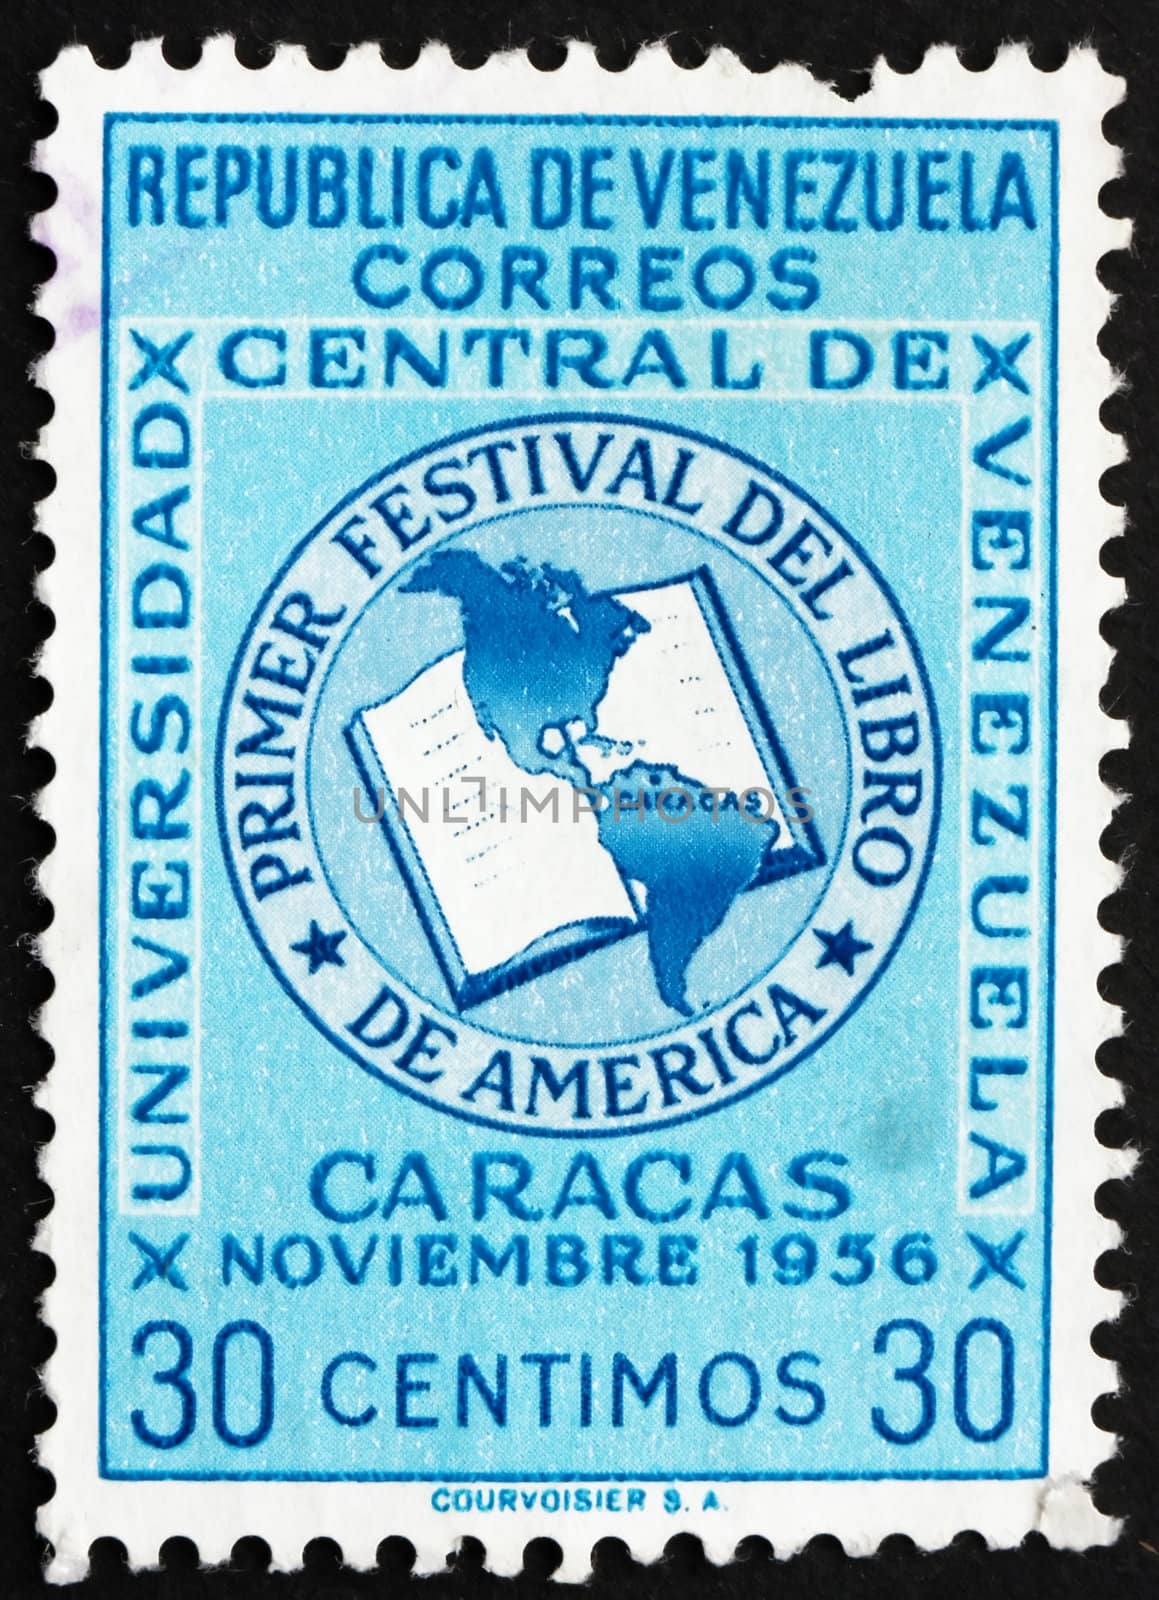 VENEZUELA - CIRCA 1956: a stamp printed in the Venezuela shows Book and Map of the Americas, Book Festival of the Americas, circa 1956